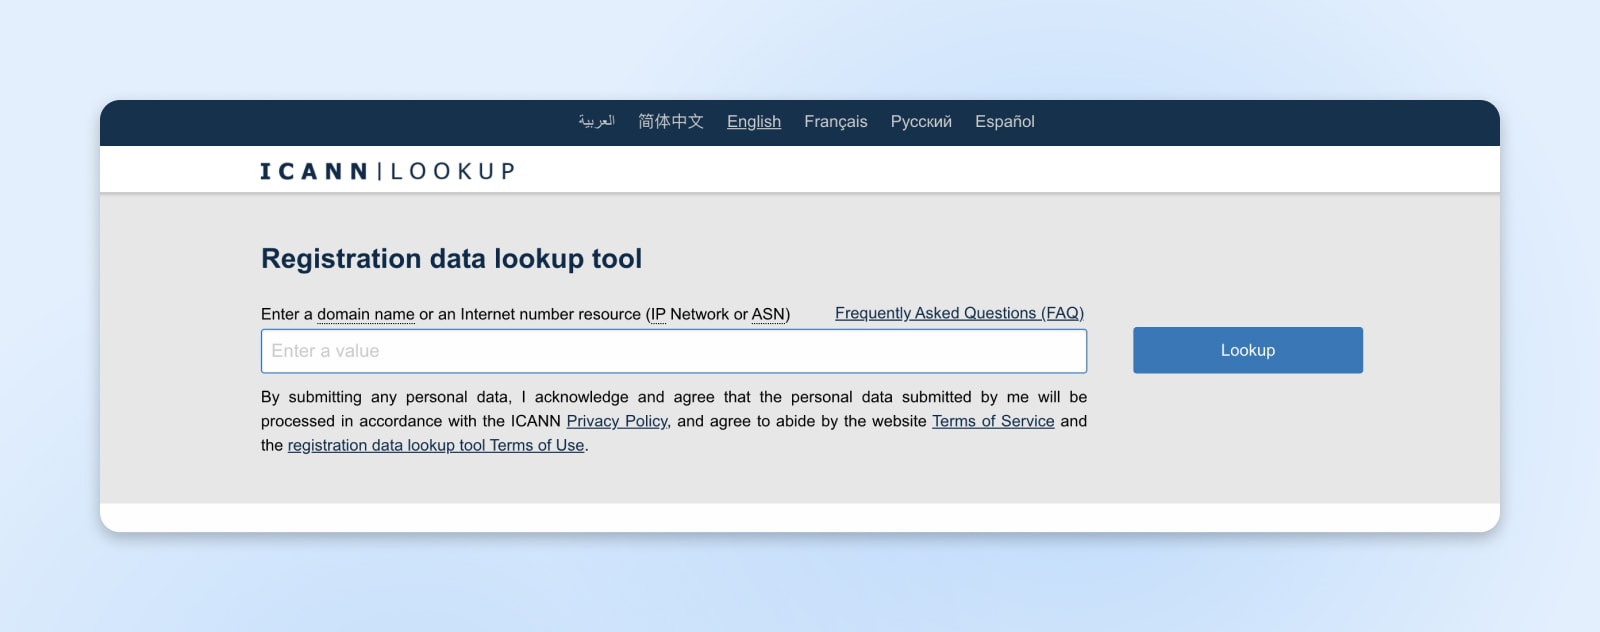 "ICANN Lookup" website hero section with "Registration data lookup tool" in focus.